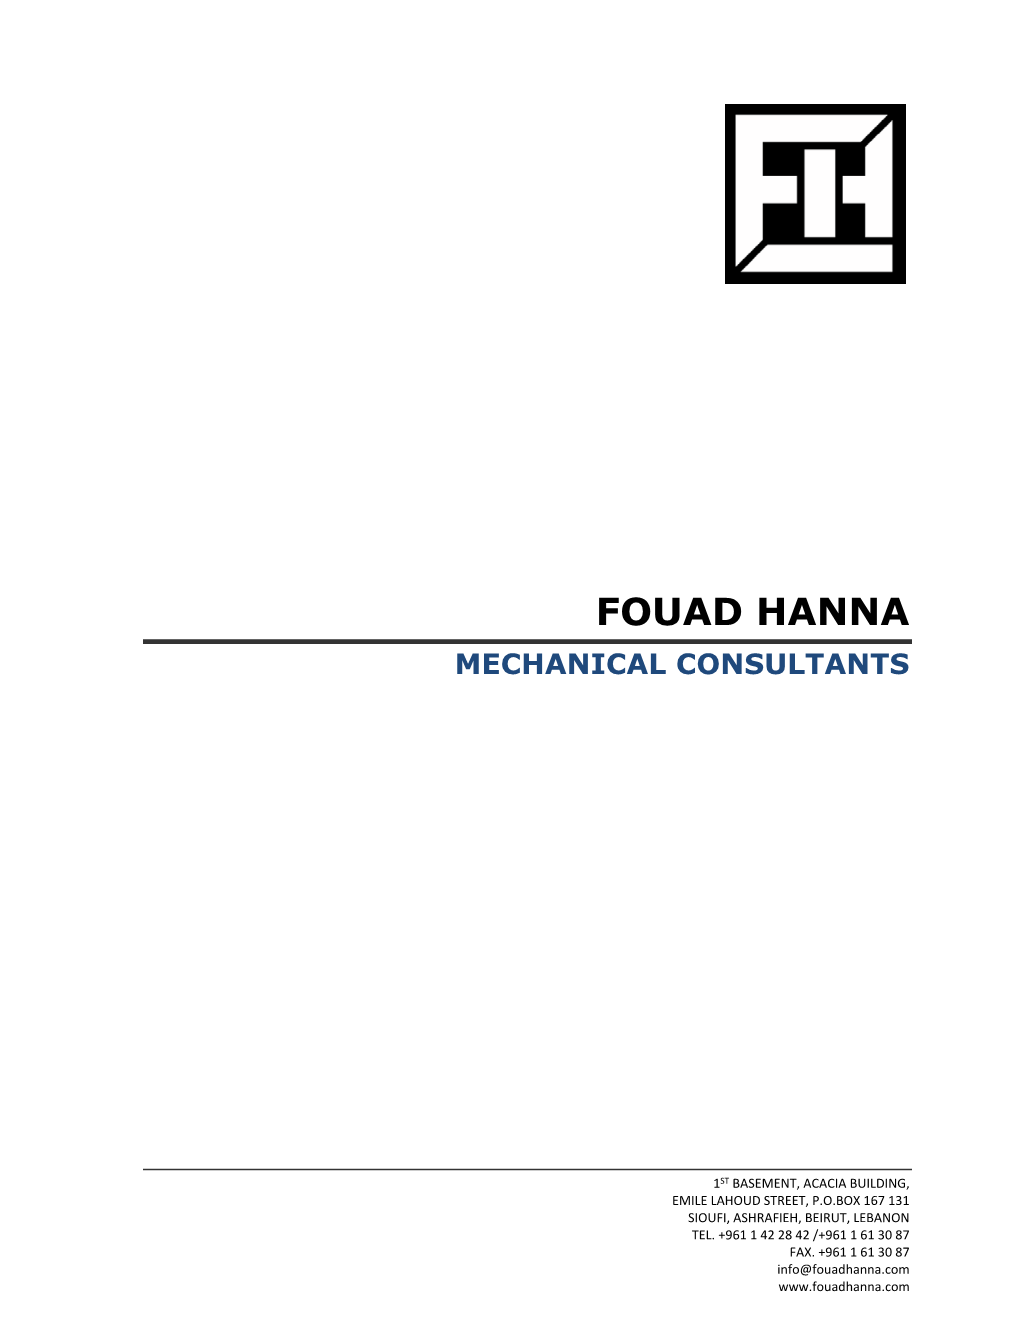 Fouad Hanna Mechanical Consultants